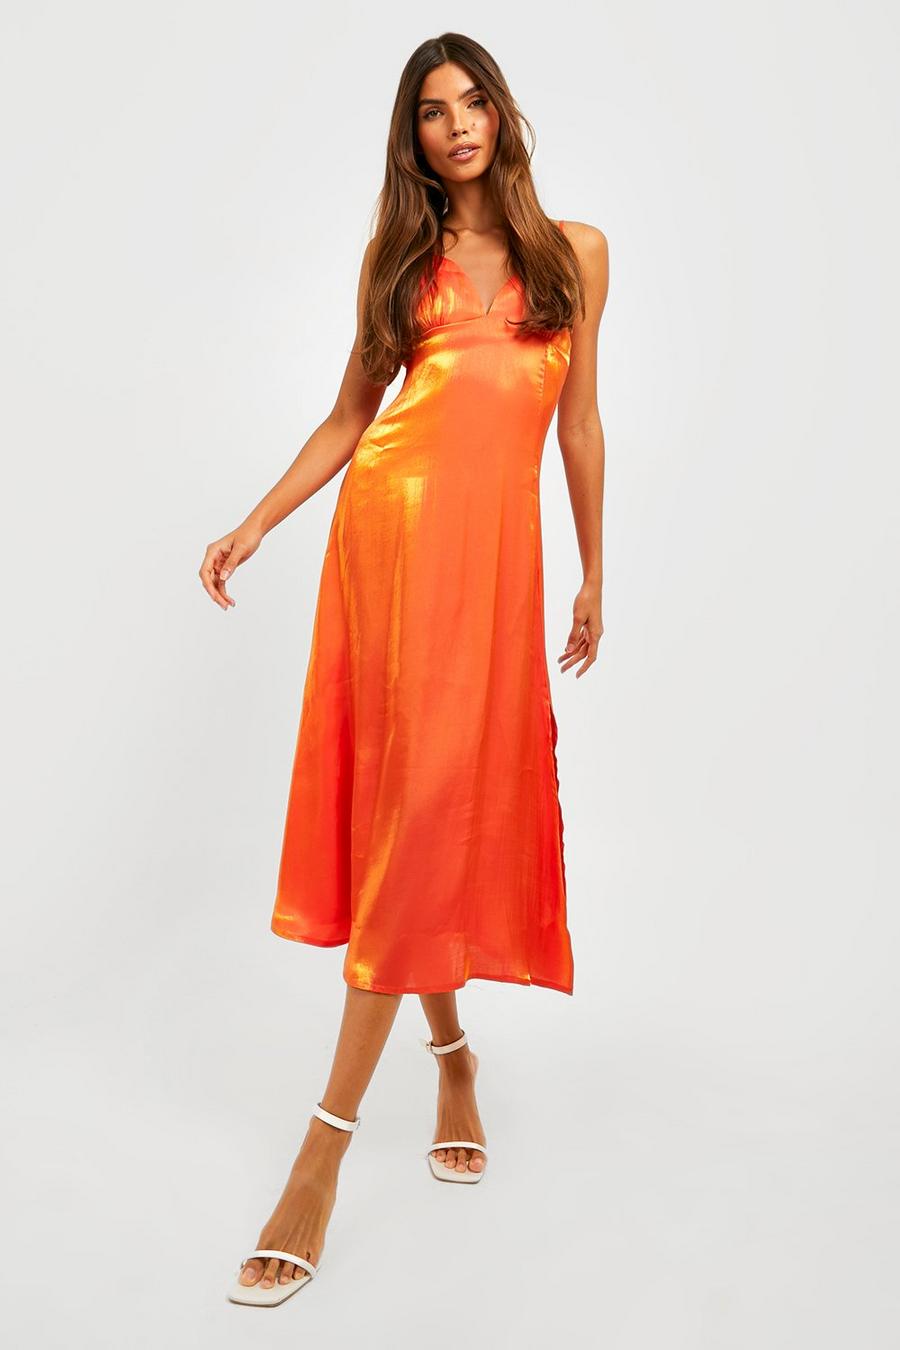 Rust orange Shimmer Satin Strappy Slip Dress